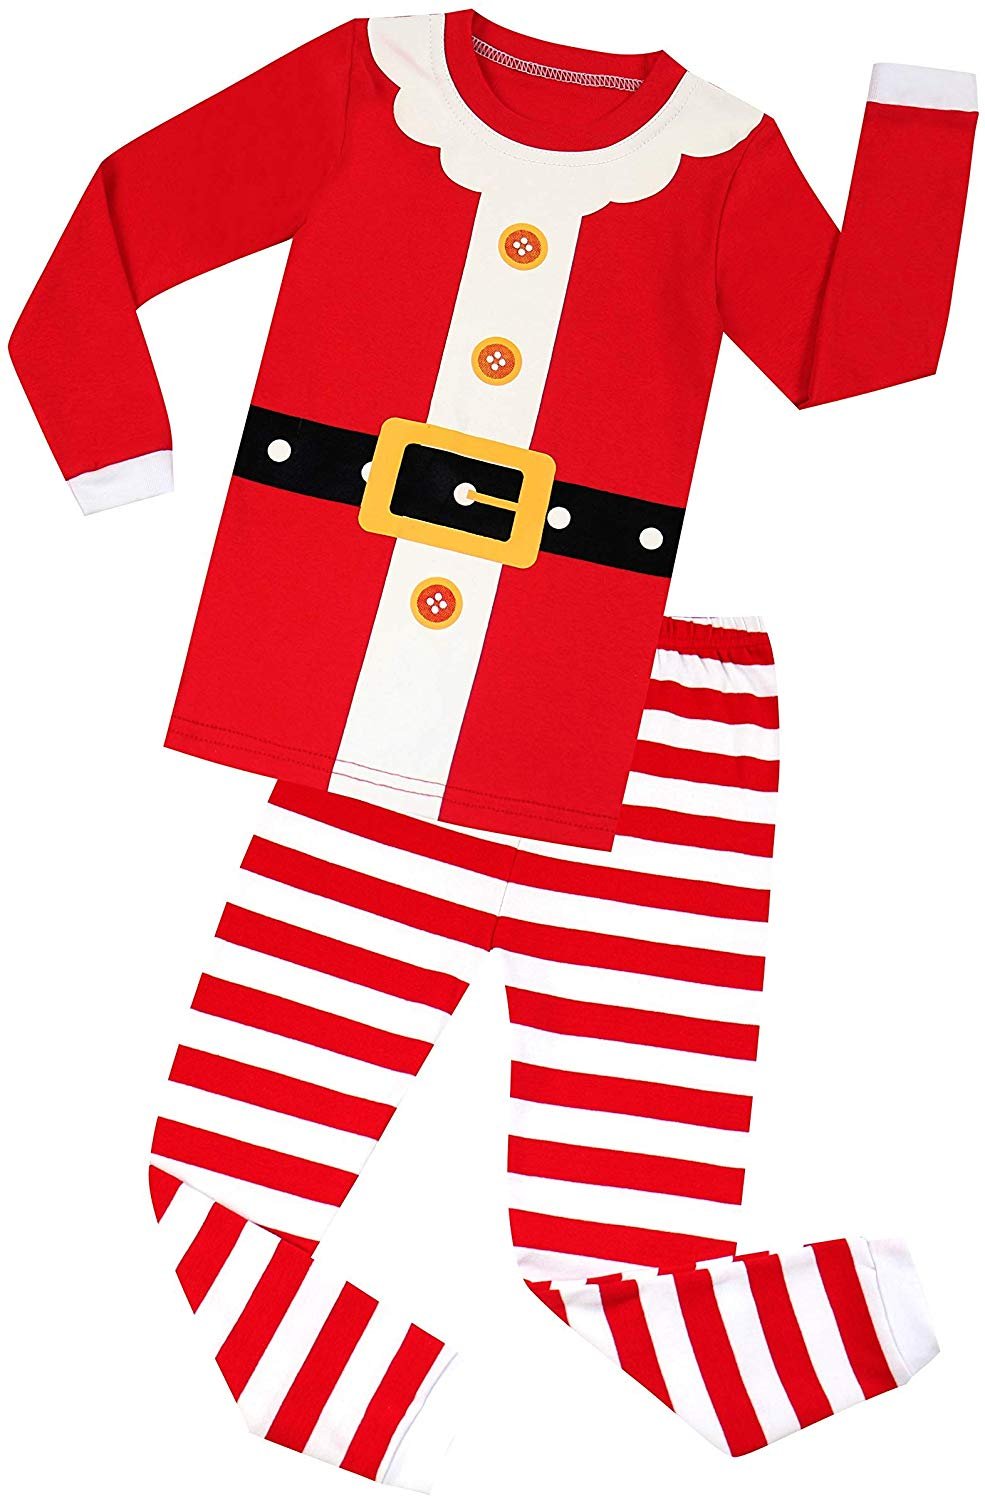  Senert Matching Family Christmas Pajamas Set Long Sleeve Pj  Sets Holiday Pajamas Button Down Loungewear Plaid Santa